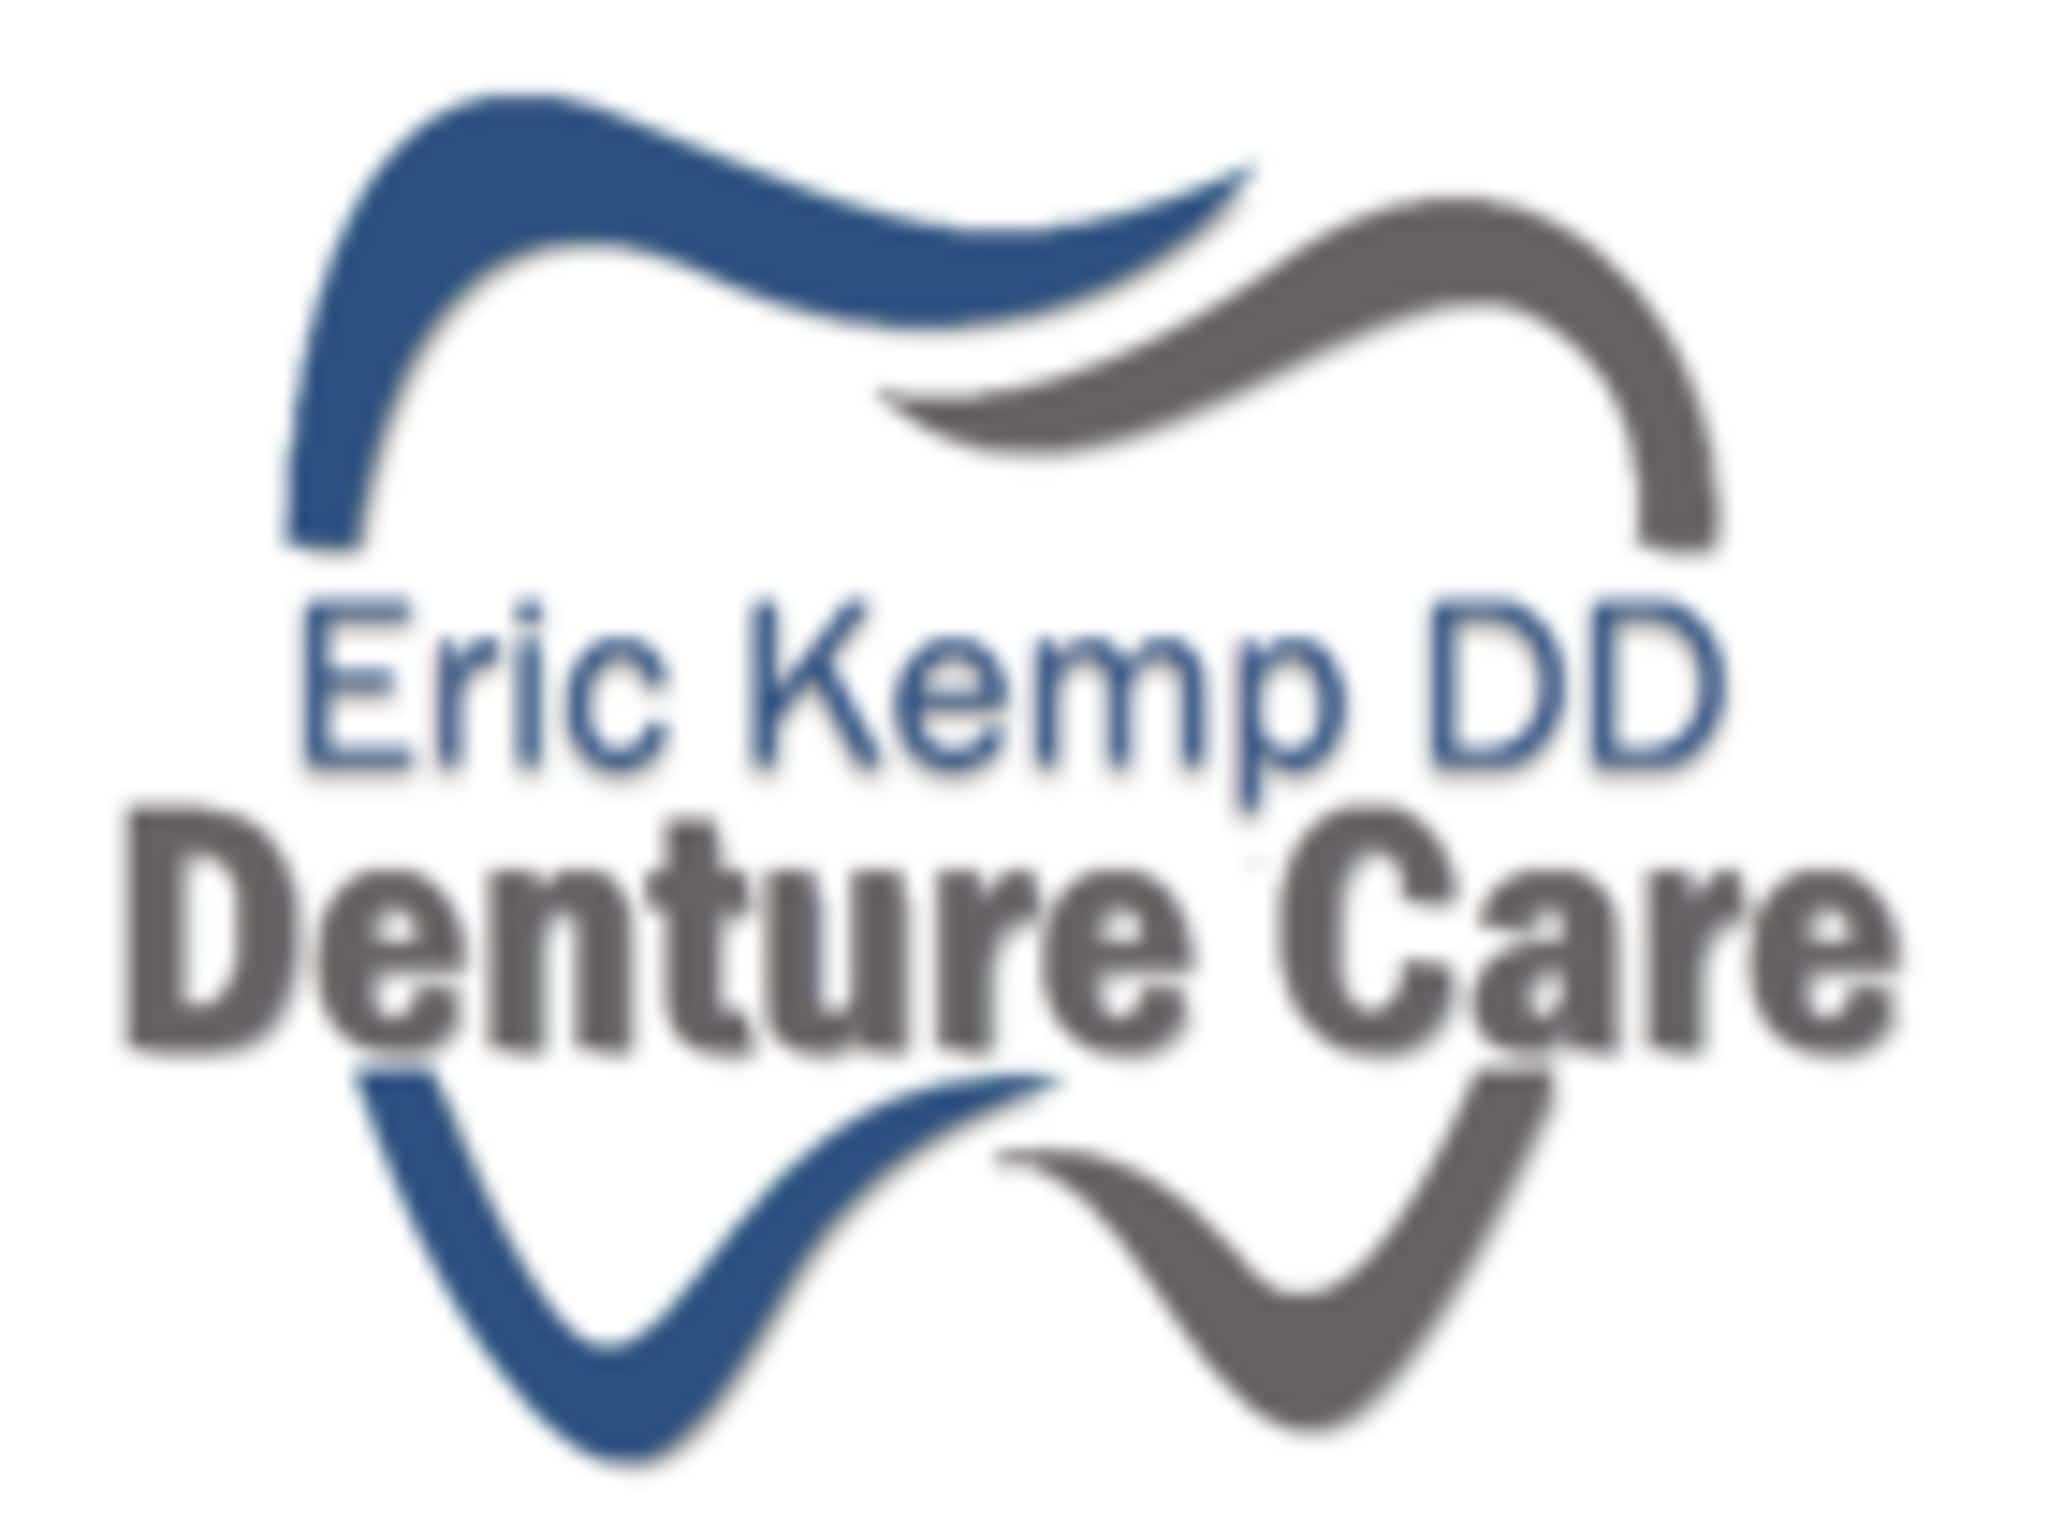 photo Eric Kemp DD Denture Care